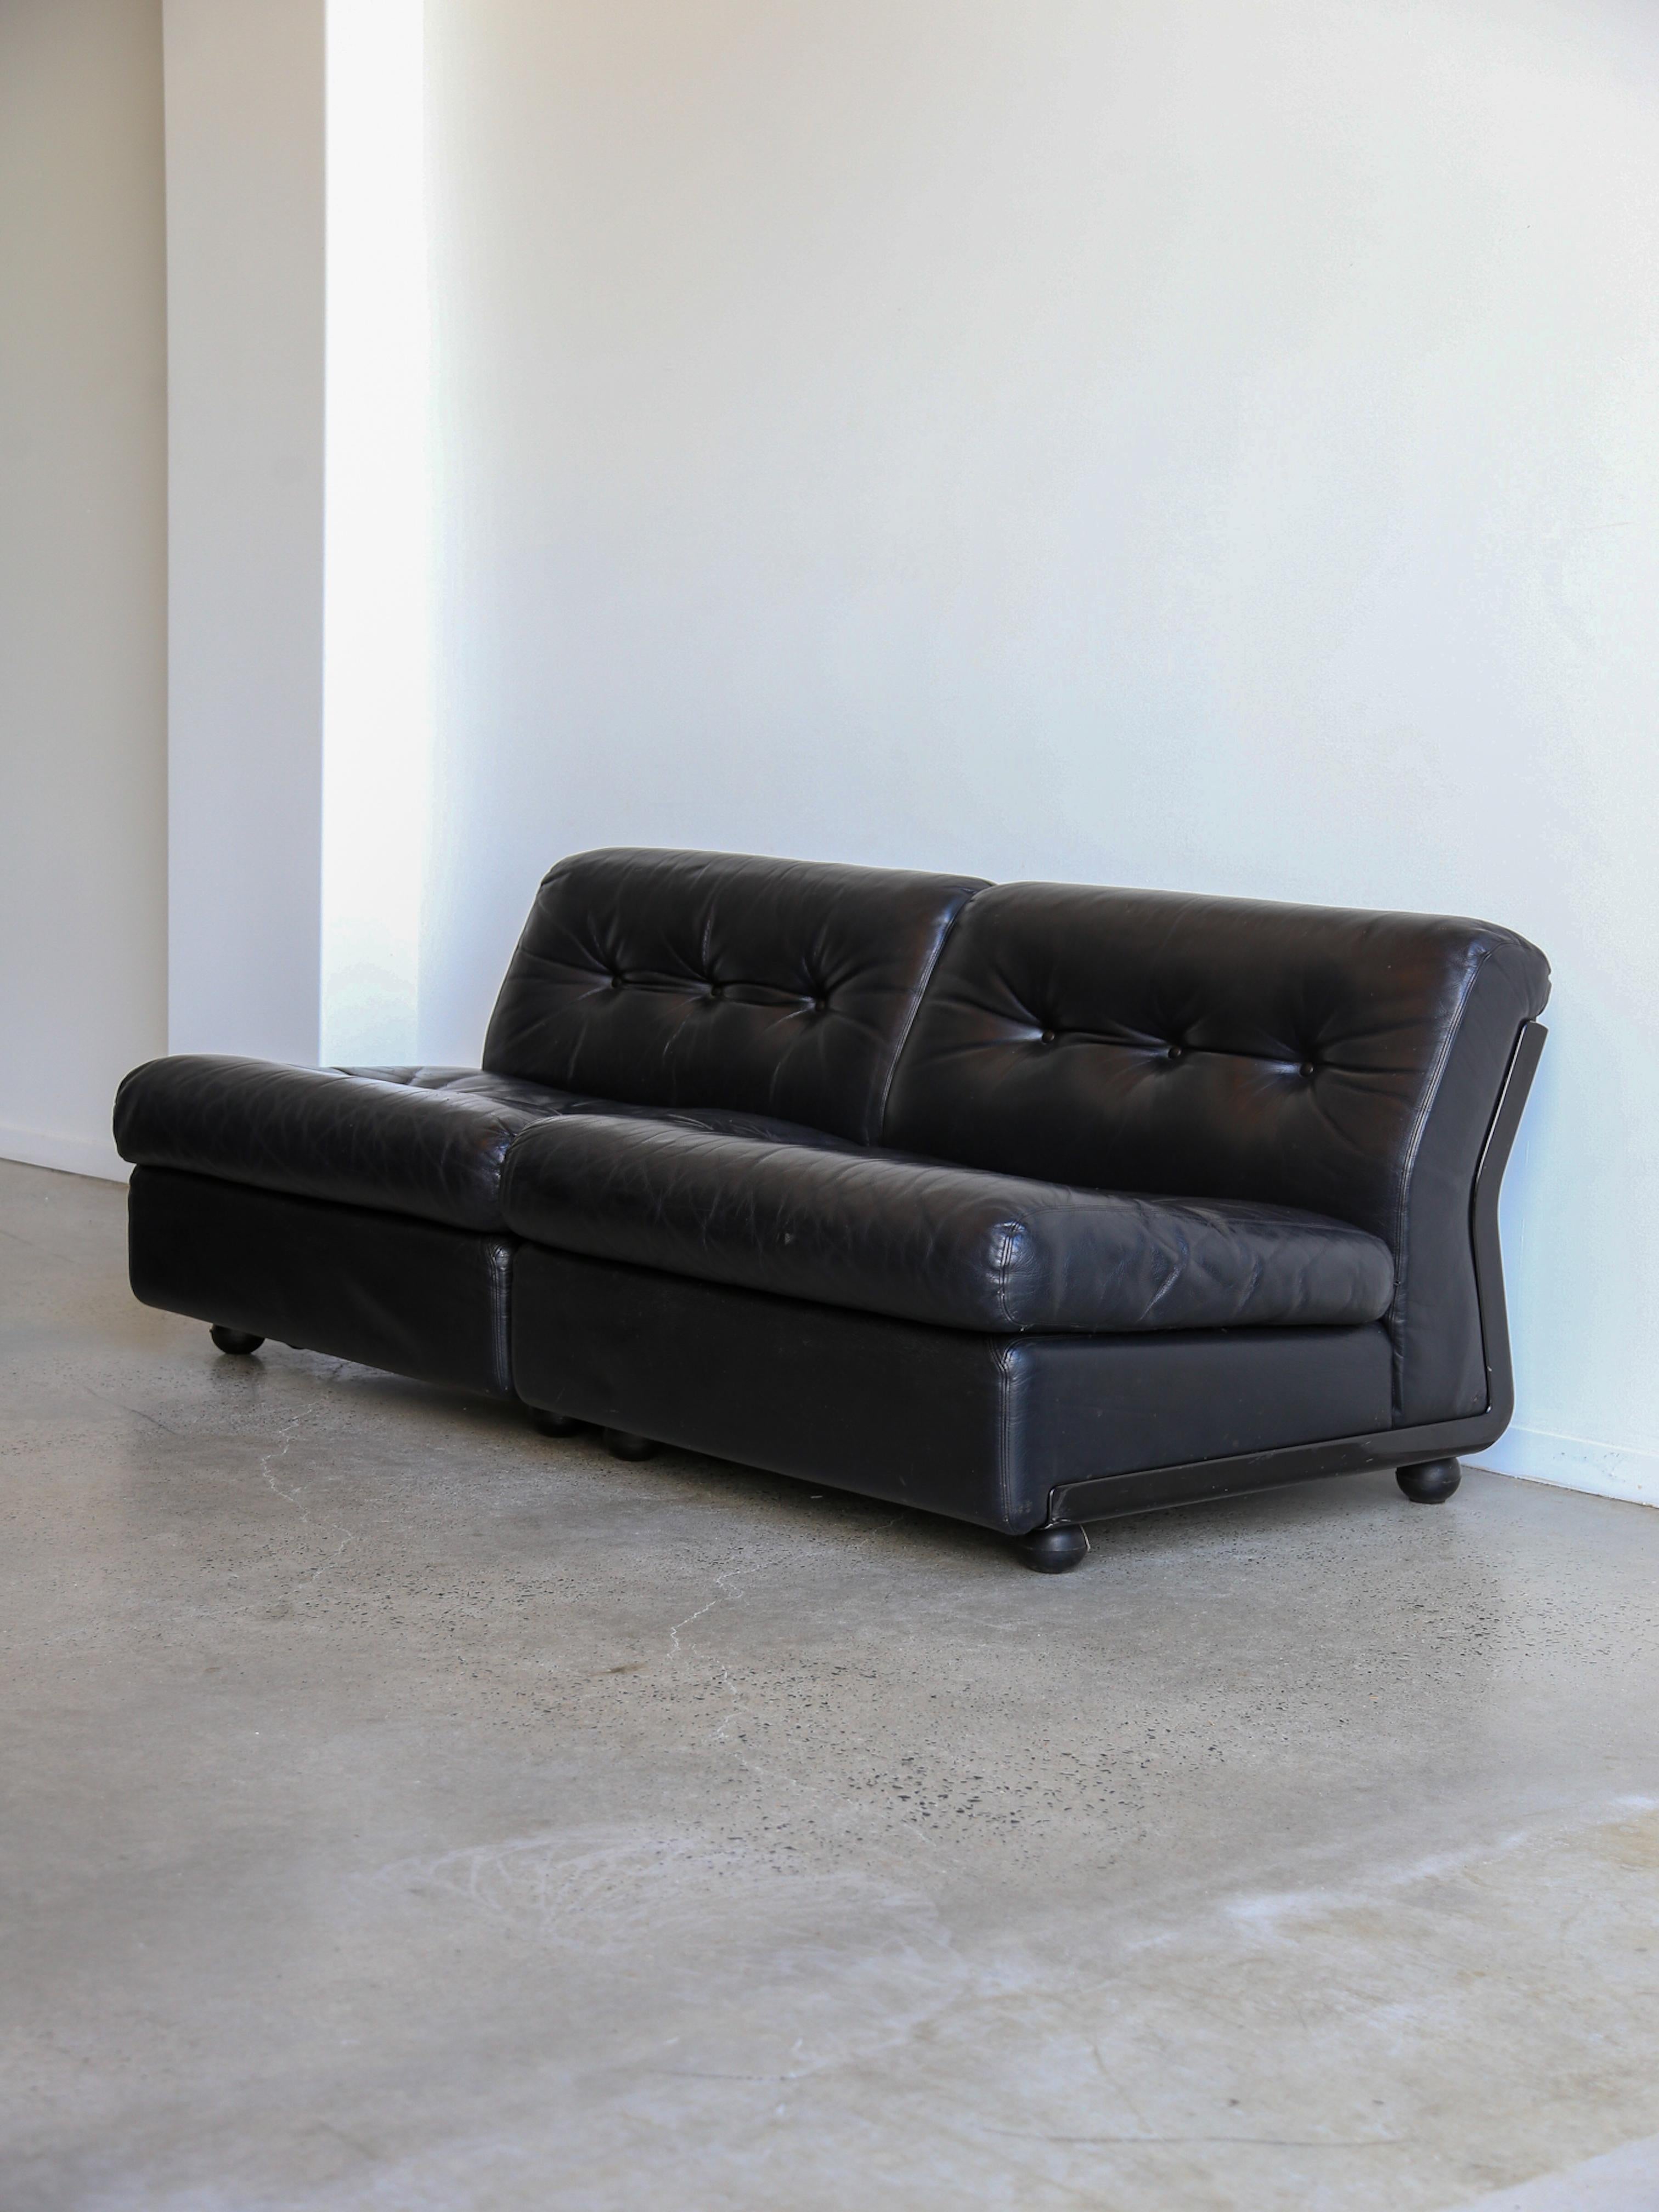 Amanta Modular Sofa in Black Leather By Mario Bellini for B&B Italia 1970 For Sale 2